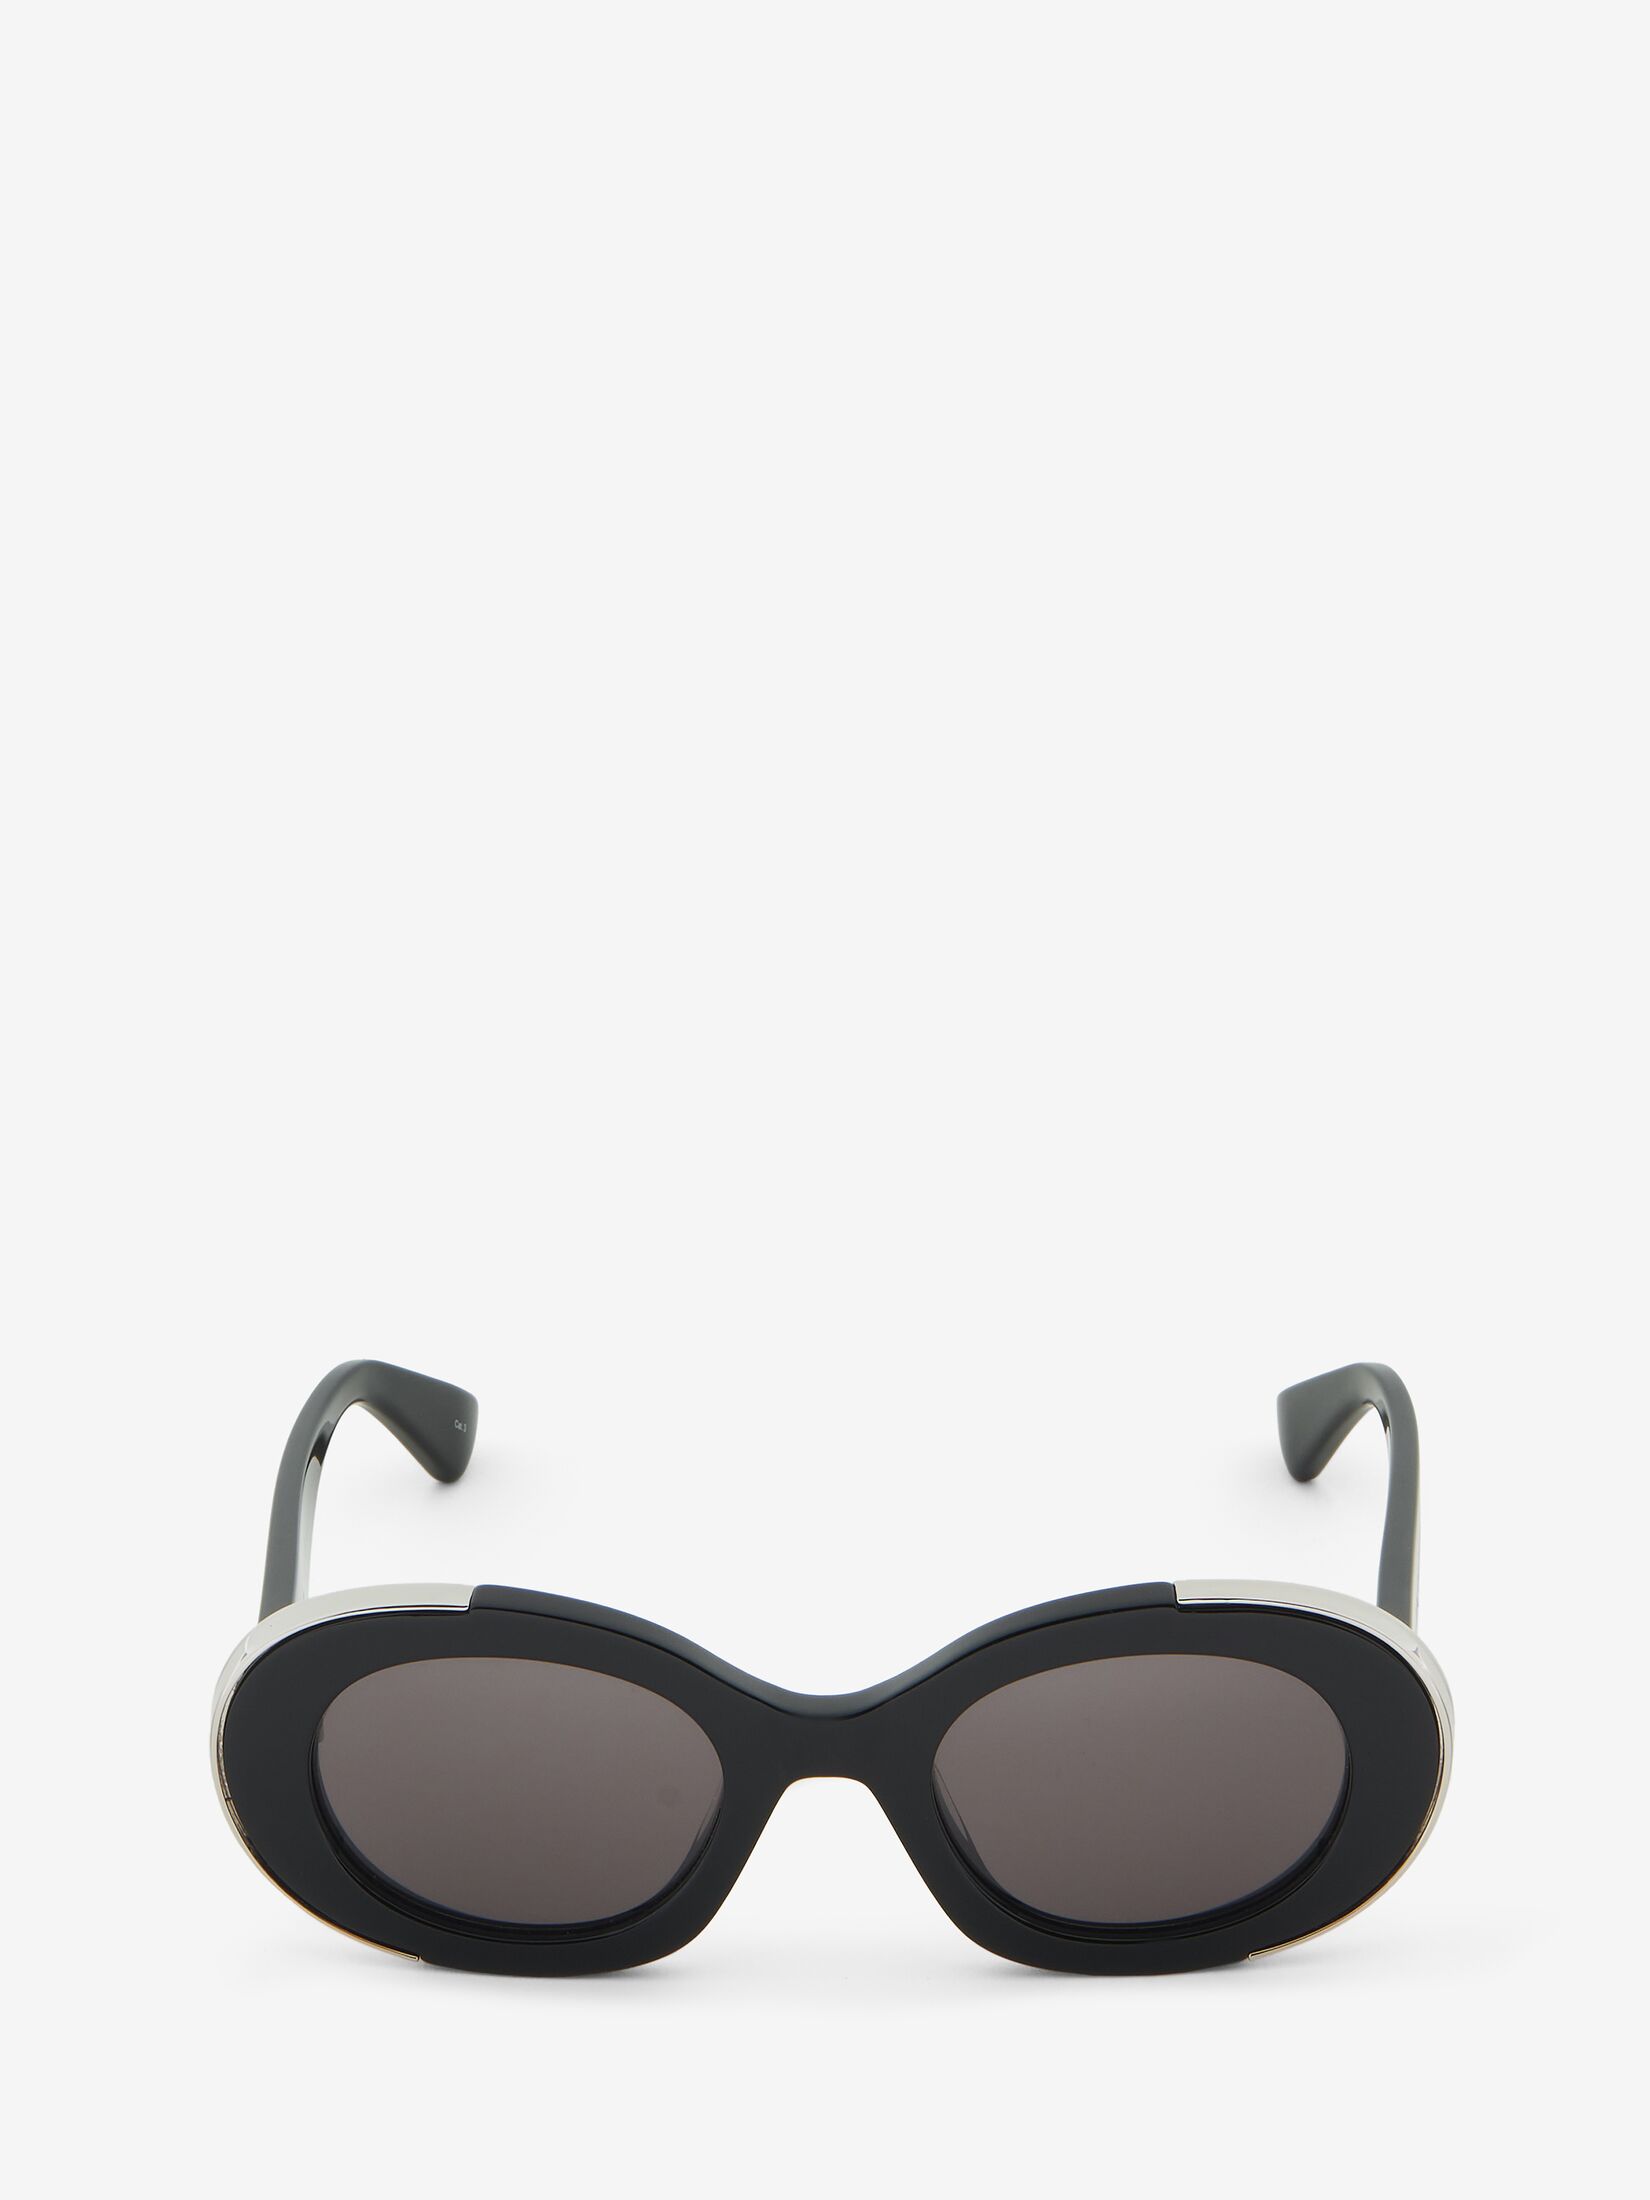 Alexander McQueen Sunglasses, Politix